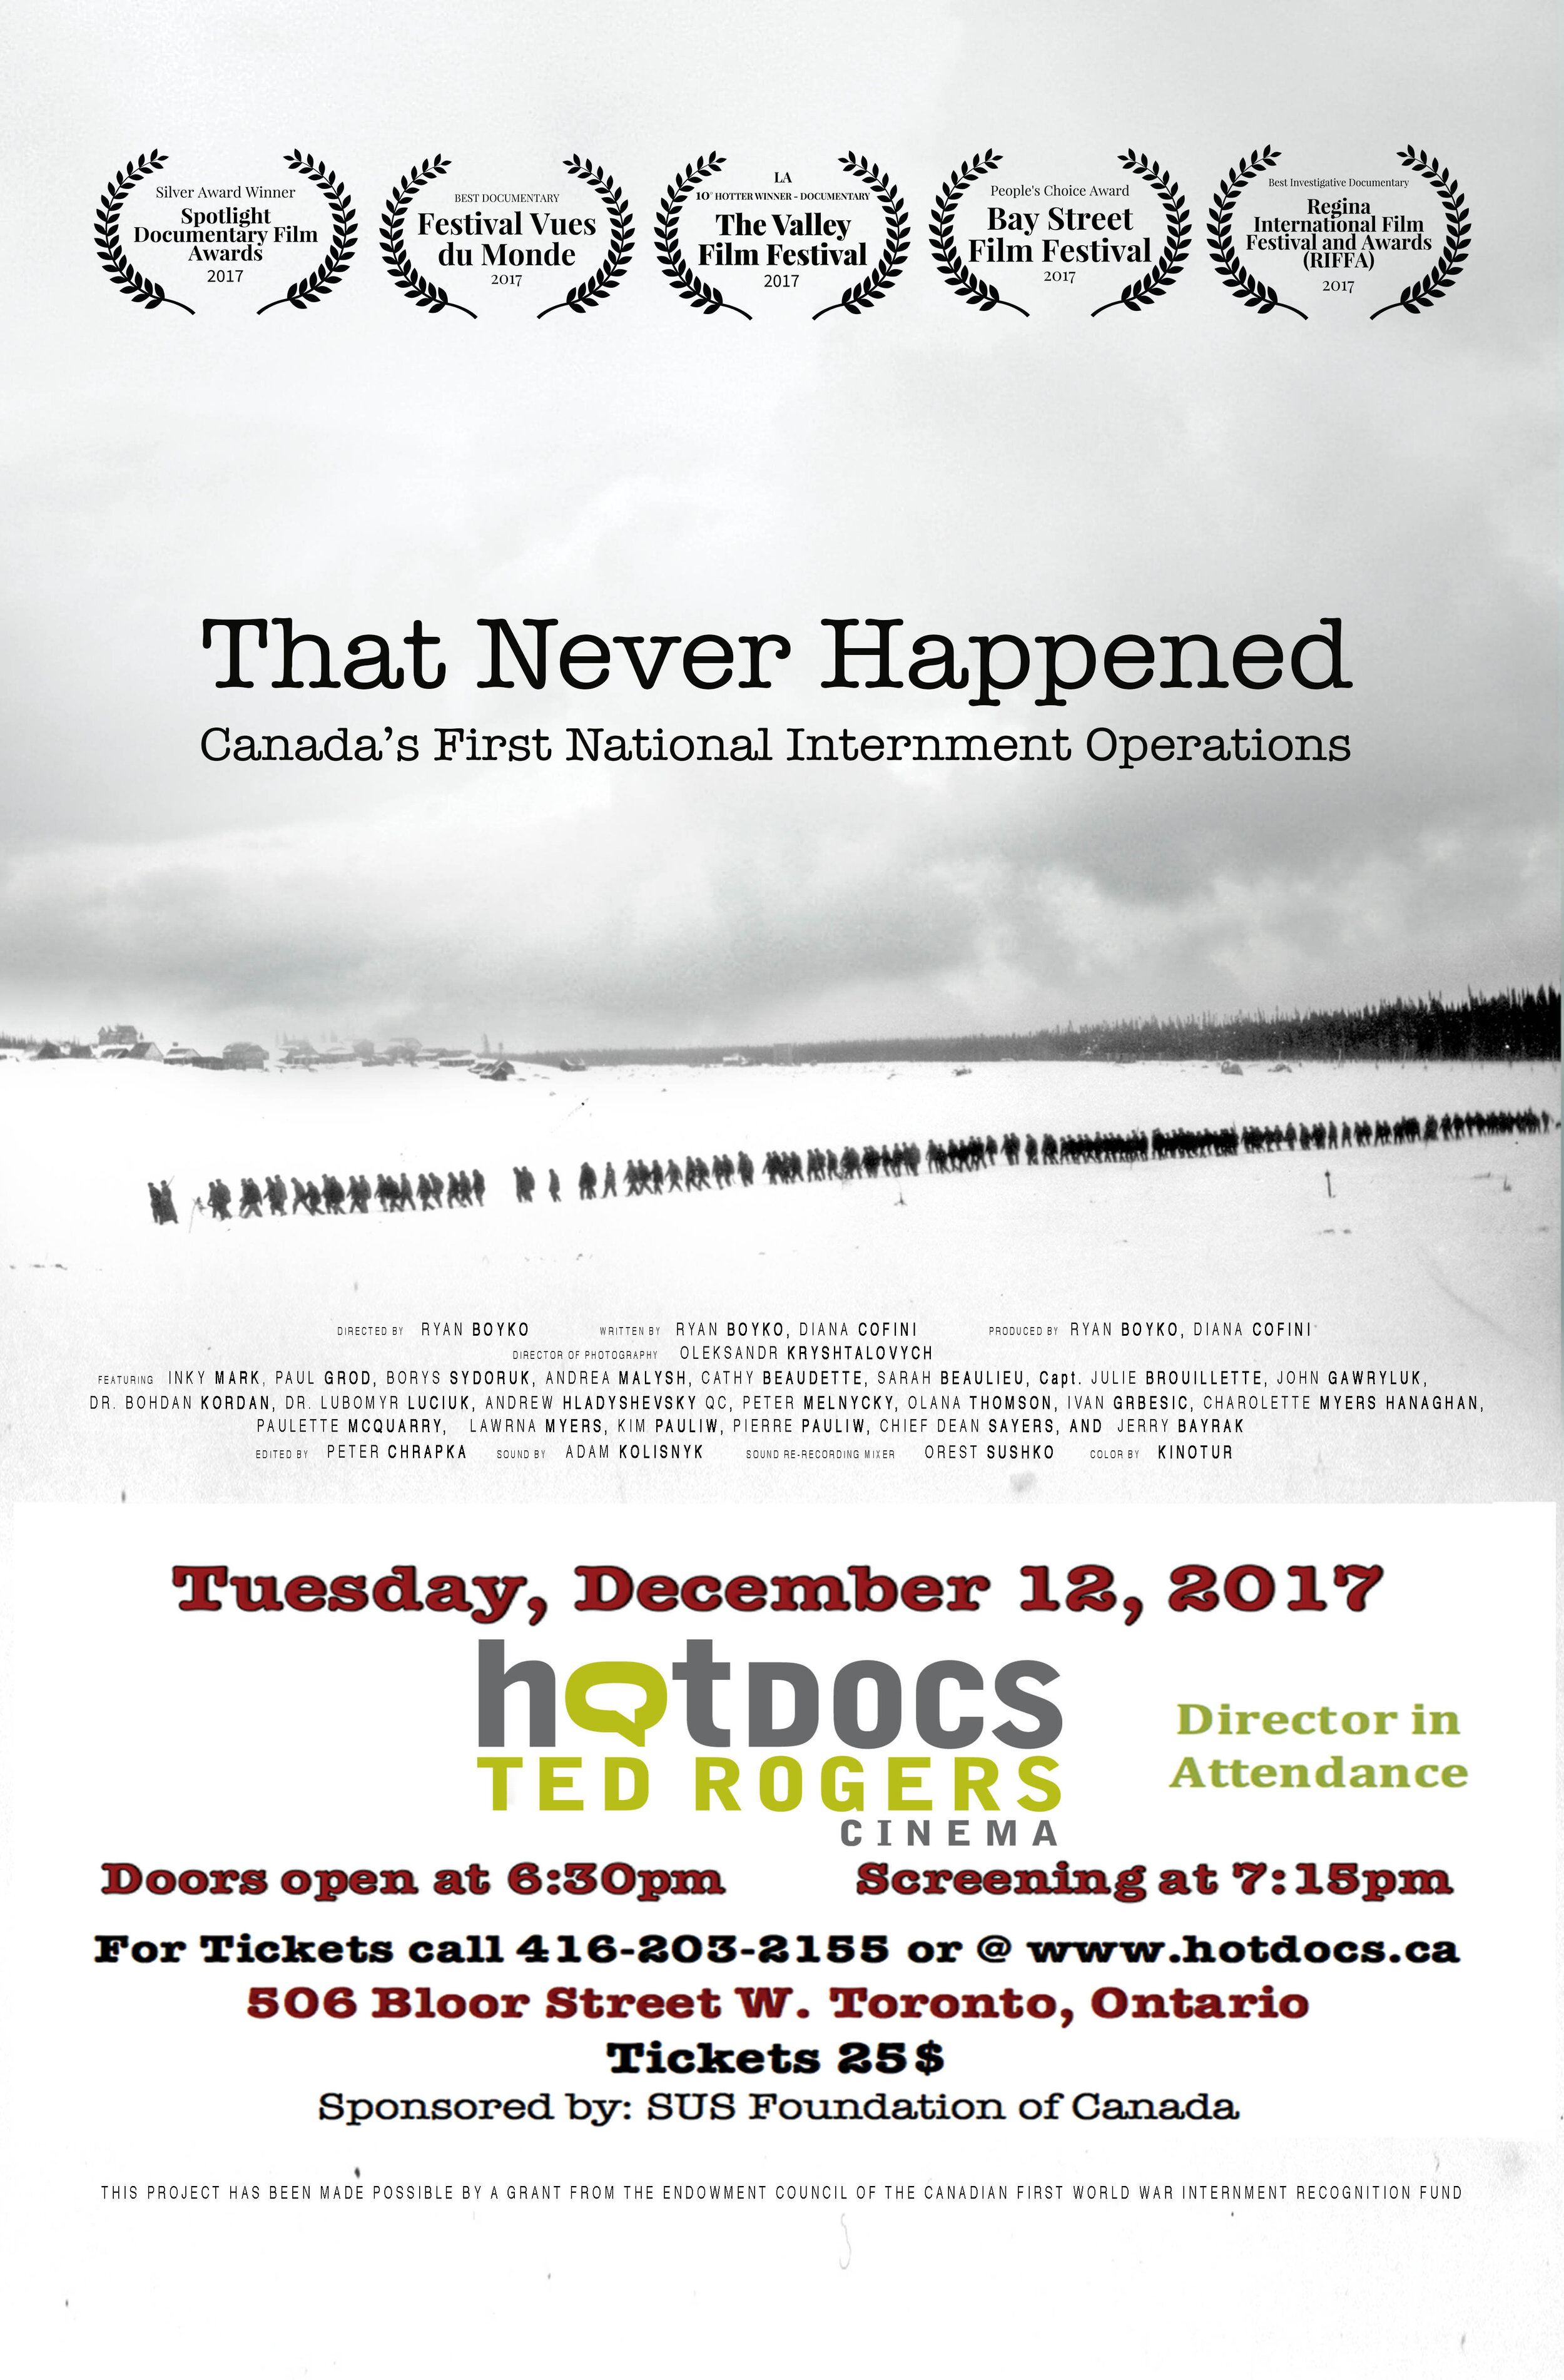 That Never Happened - Toronto Premiere